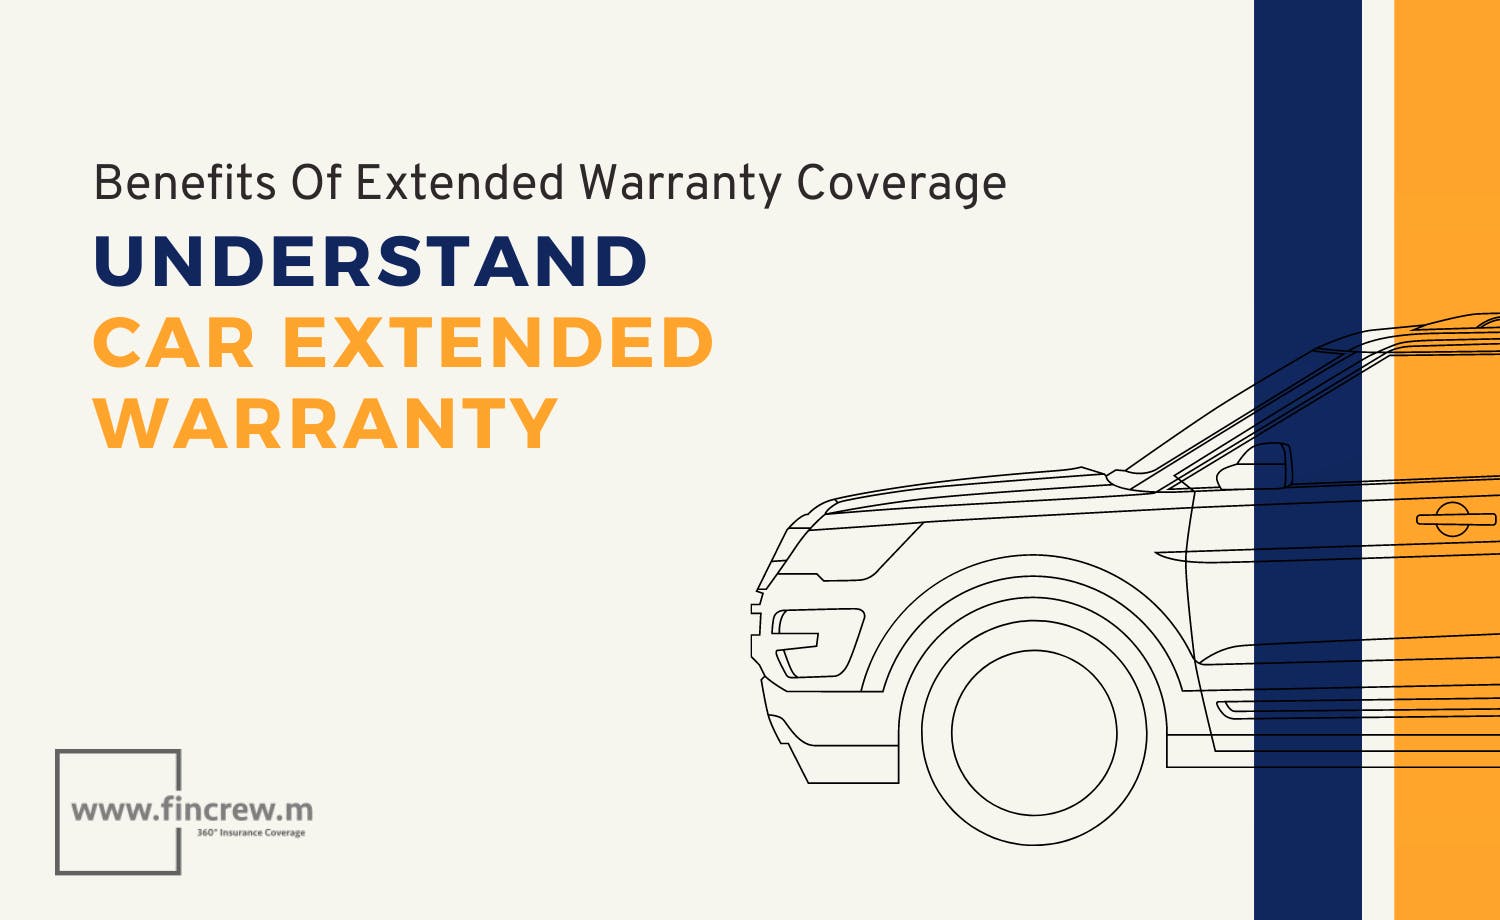 Understand Car Extended Warranty